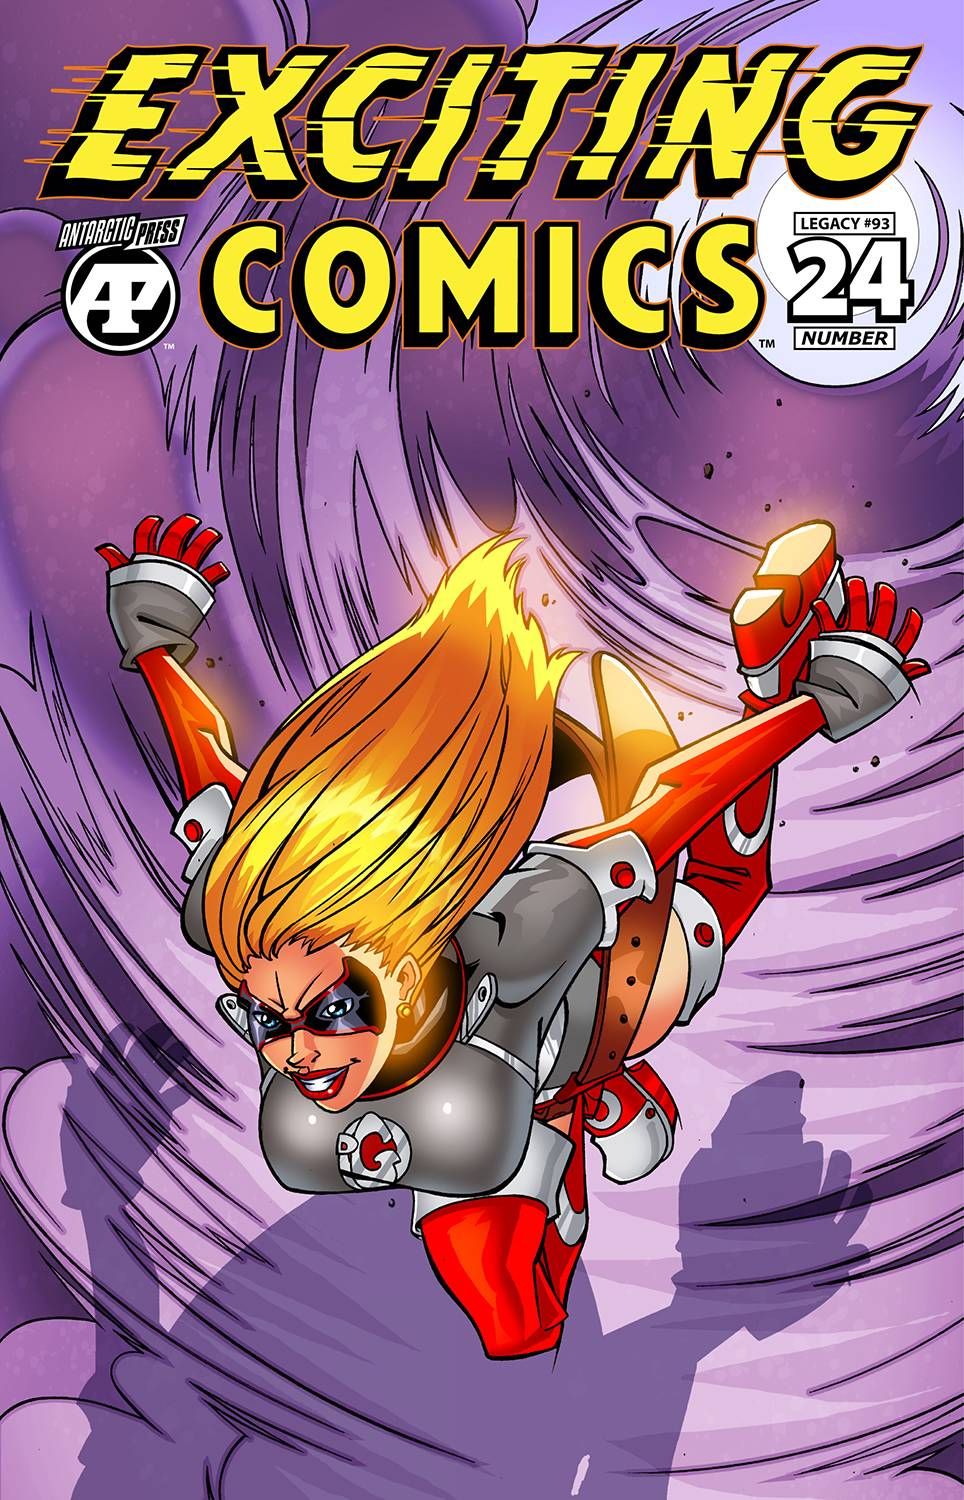 Exciting Comics #24 Comic